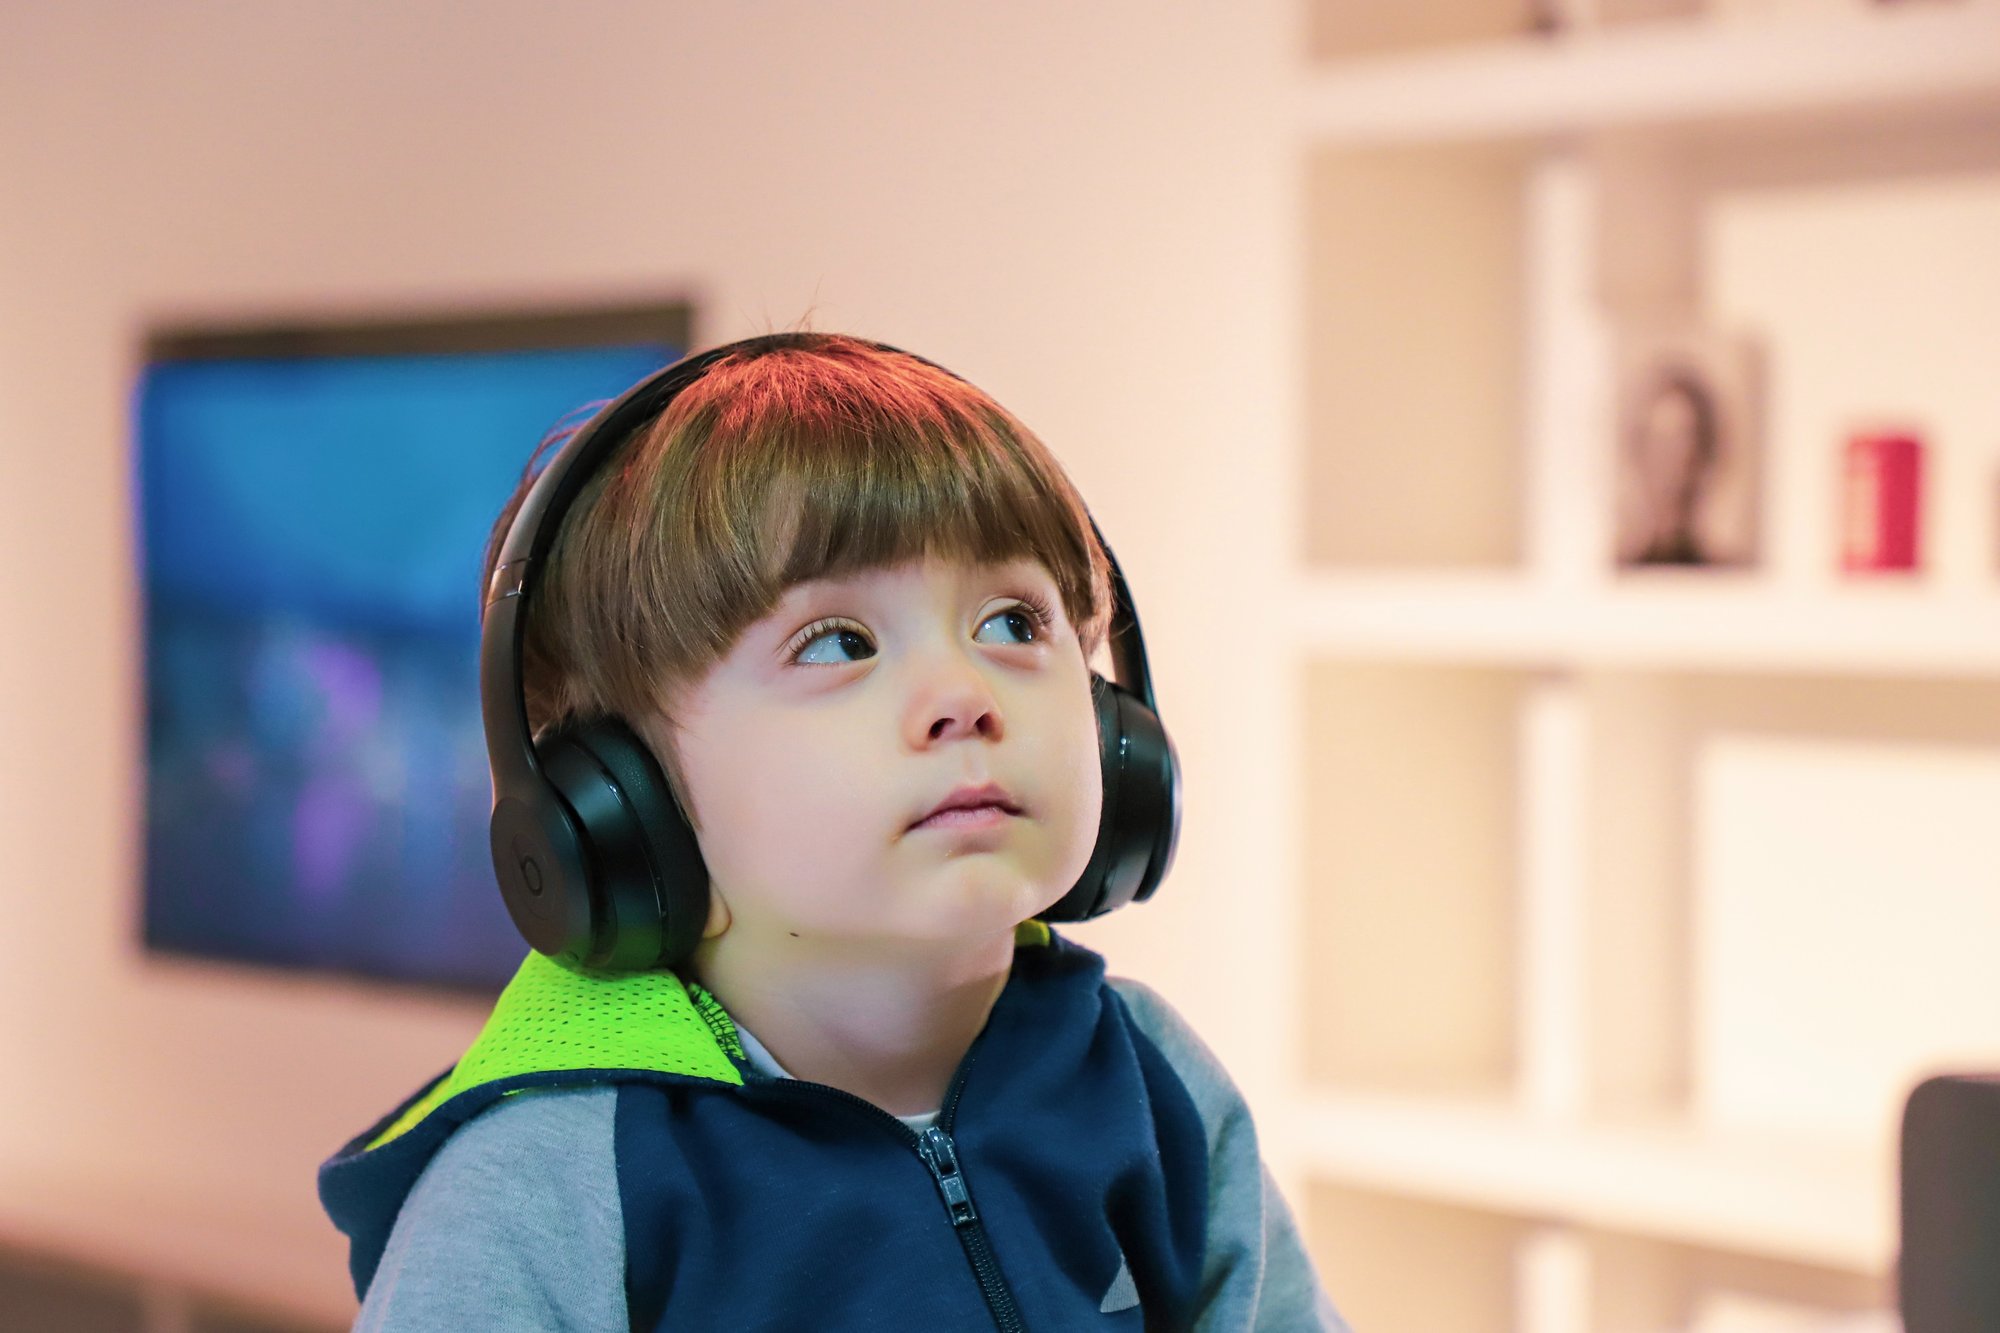 child-listening-to-web-content-with-headphones-photo-by-alireza-attari